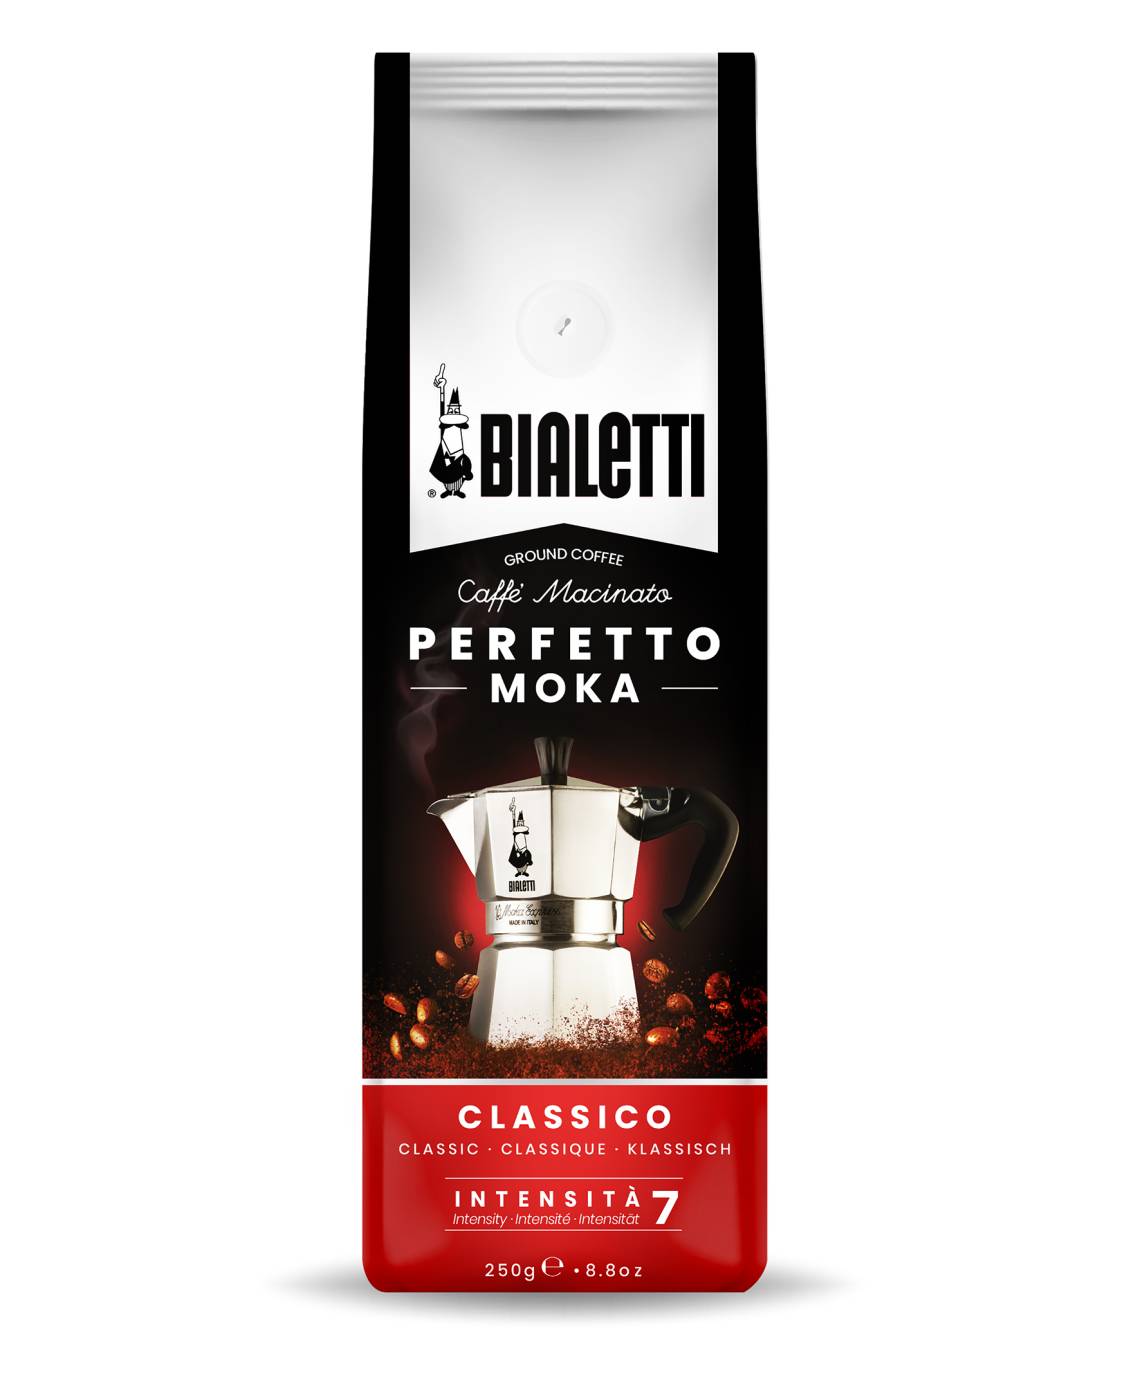 Bialetti - Perfetto Moka Classico Kaffee gemahlen, 250g